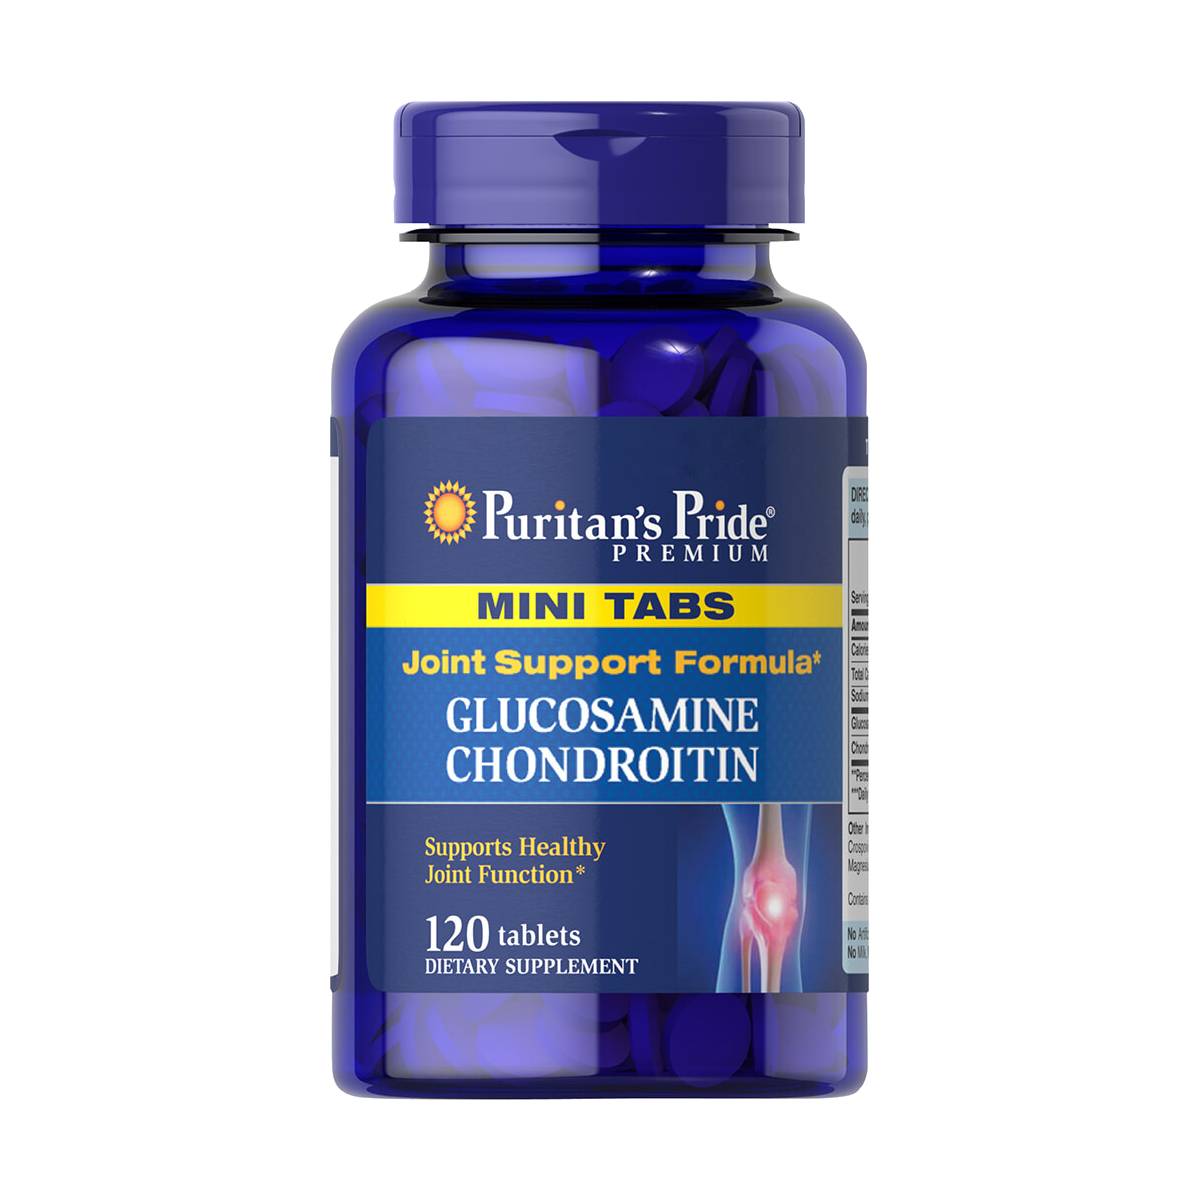 Puritan's Pride, Glucosamine Chondroitin Mini Tabs